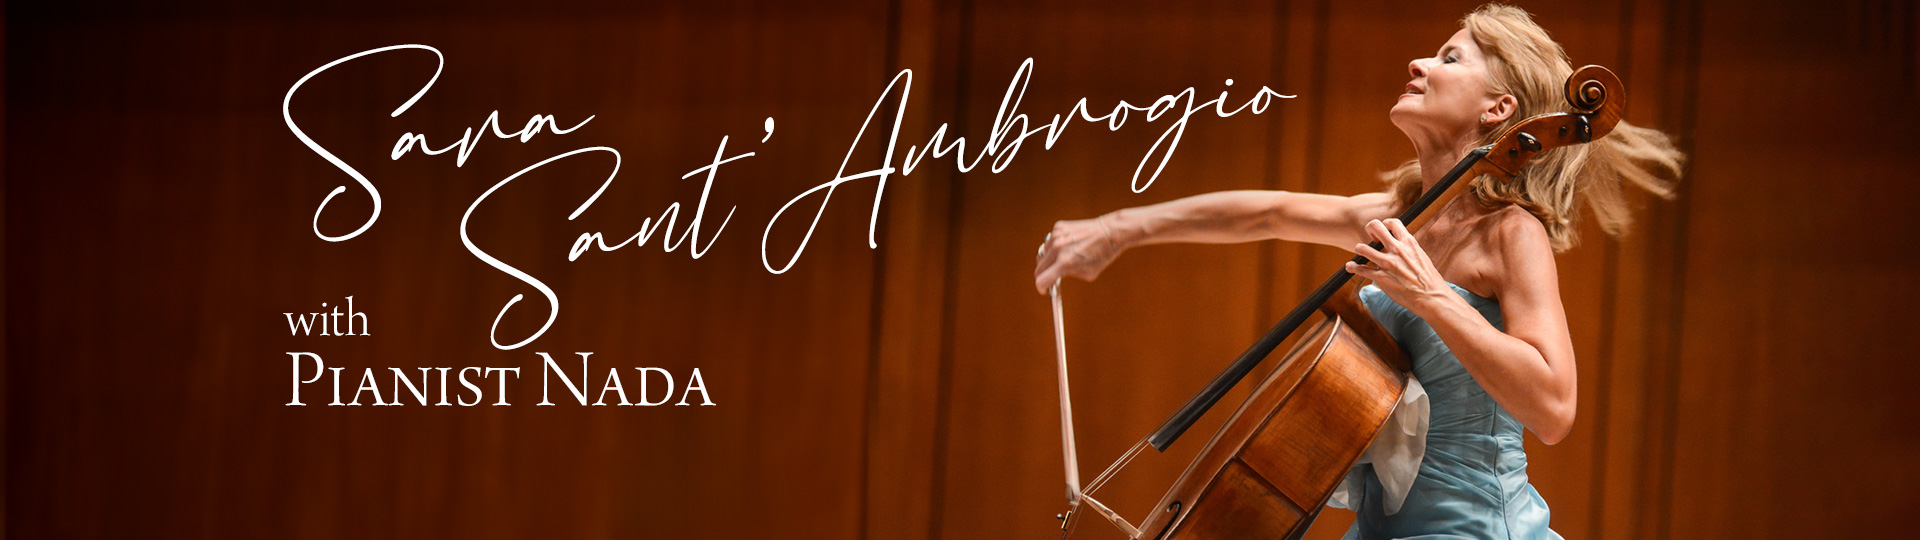 Banner image of Sara Sant'Ambrogio playing the cello